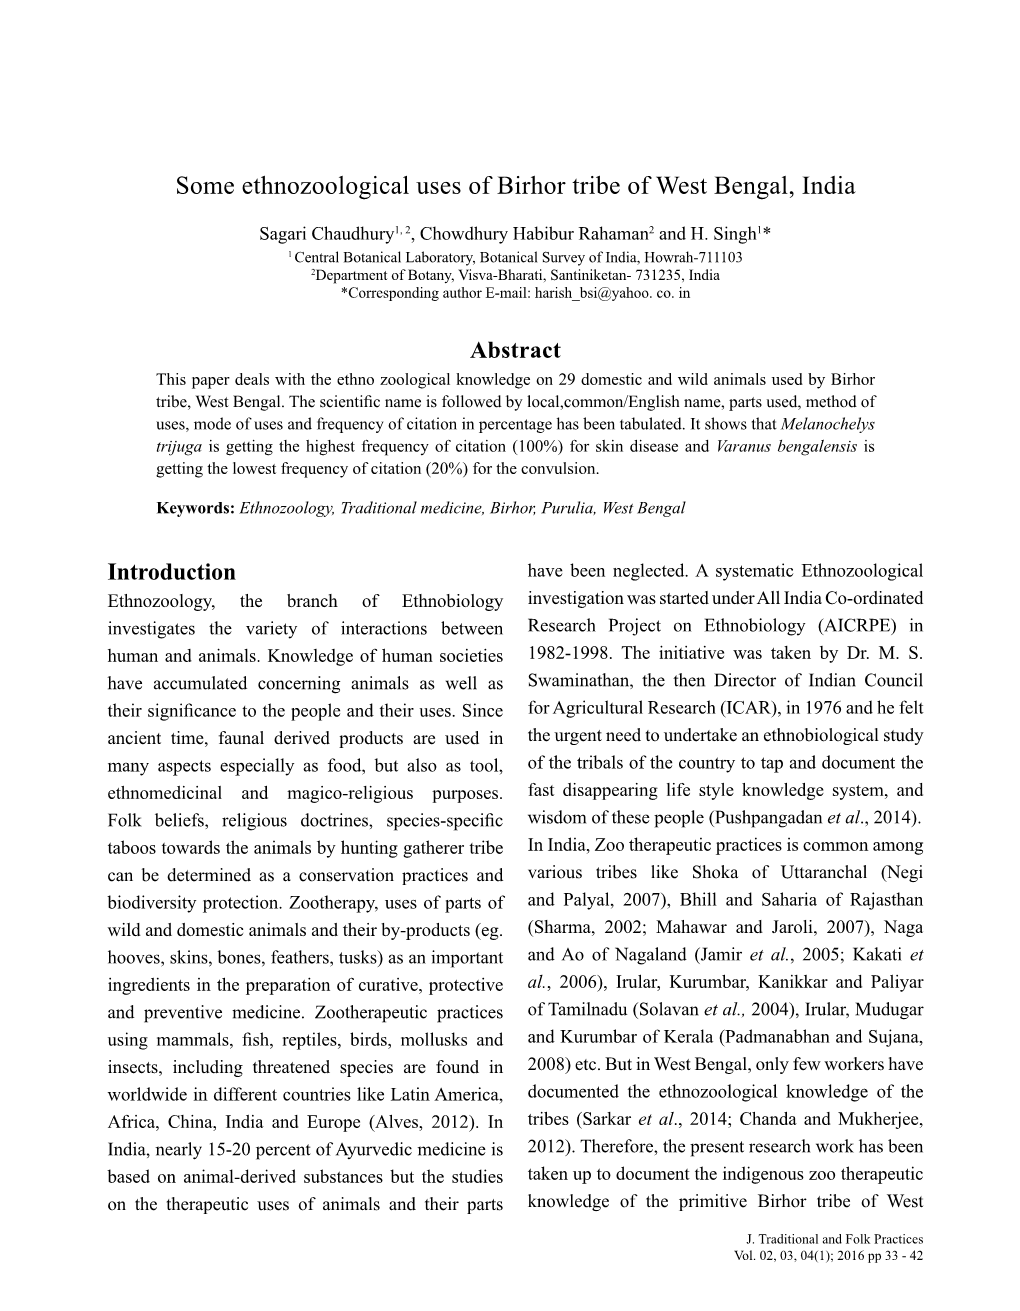 Some Ethnozoological Uses of Birhor Tribe of West Bengal, India